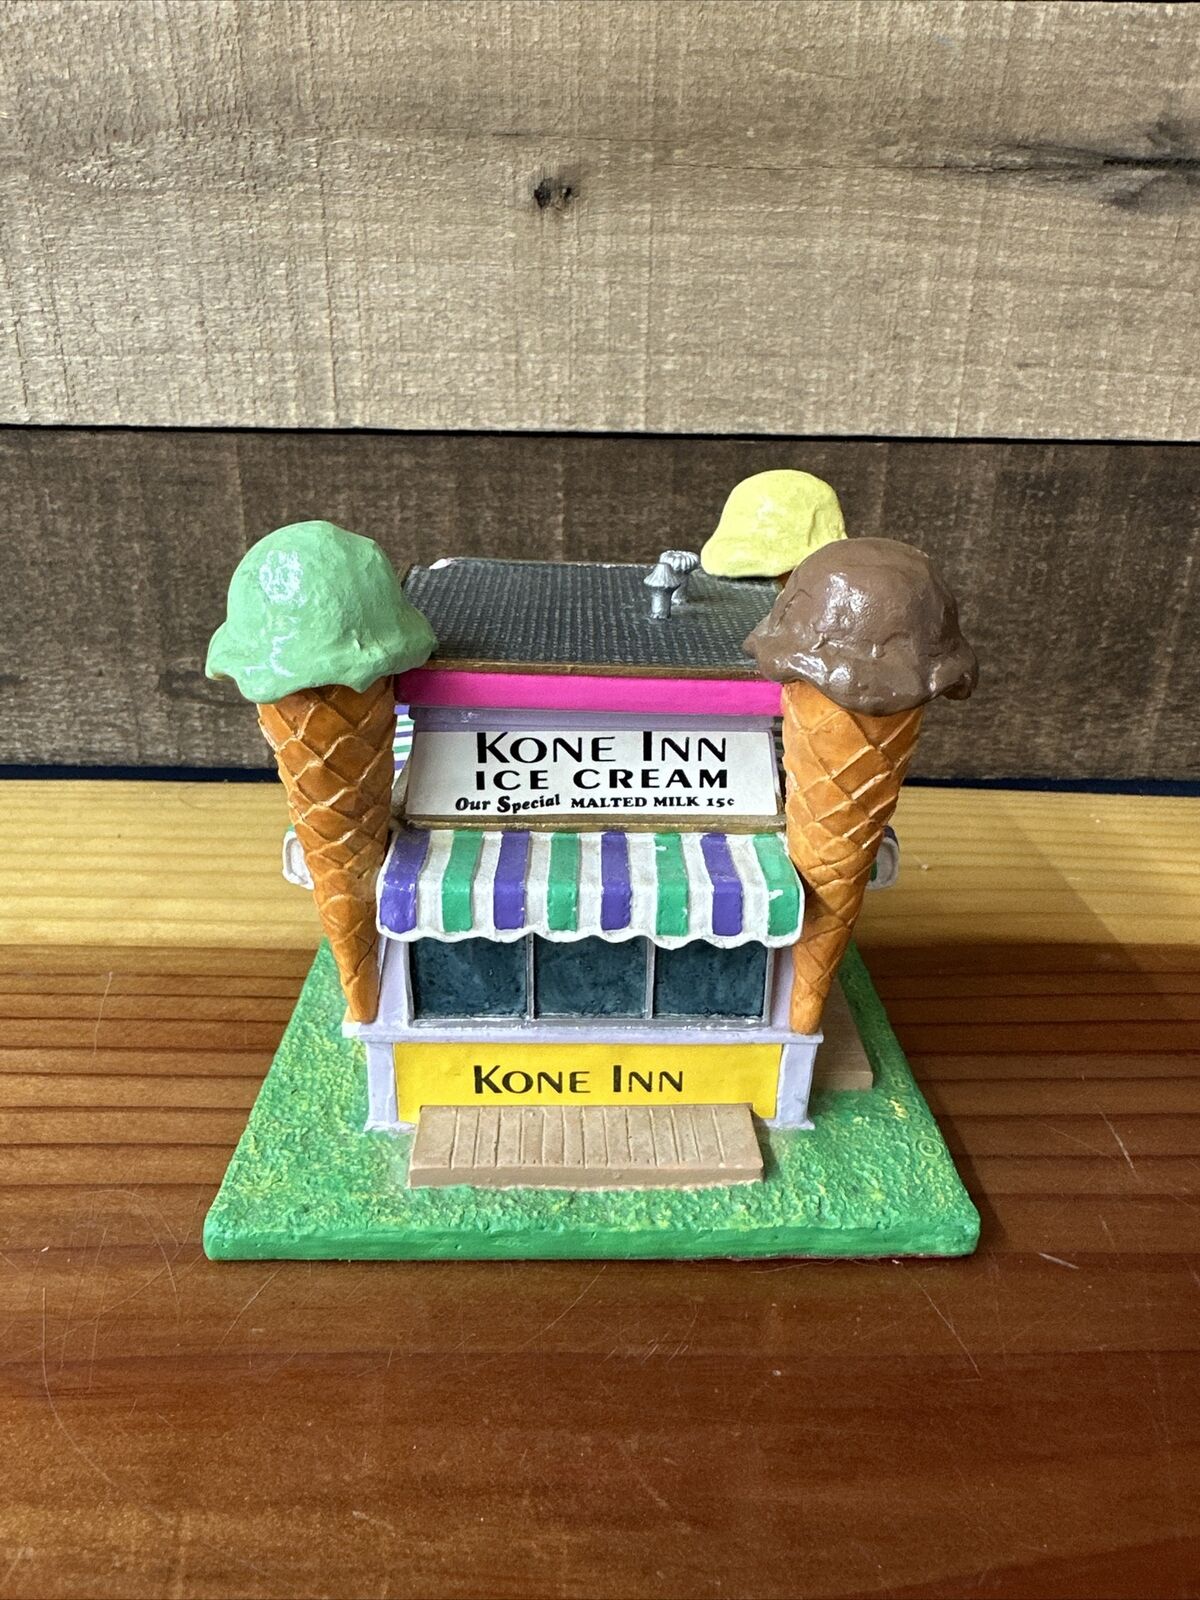 KONE INN DINER Giant Ice Cream Cone Scoops Building Lefton Roadside USA 1994